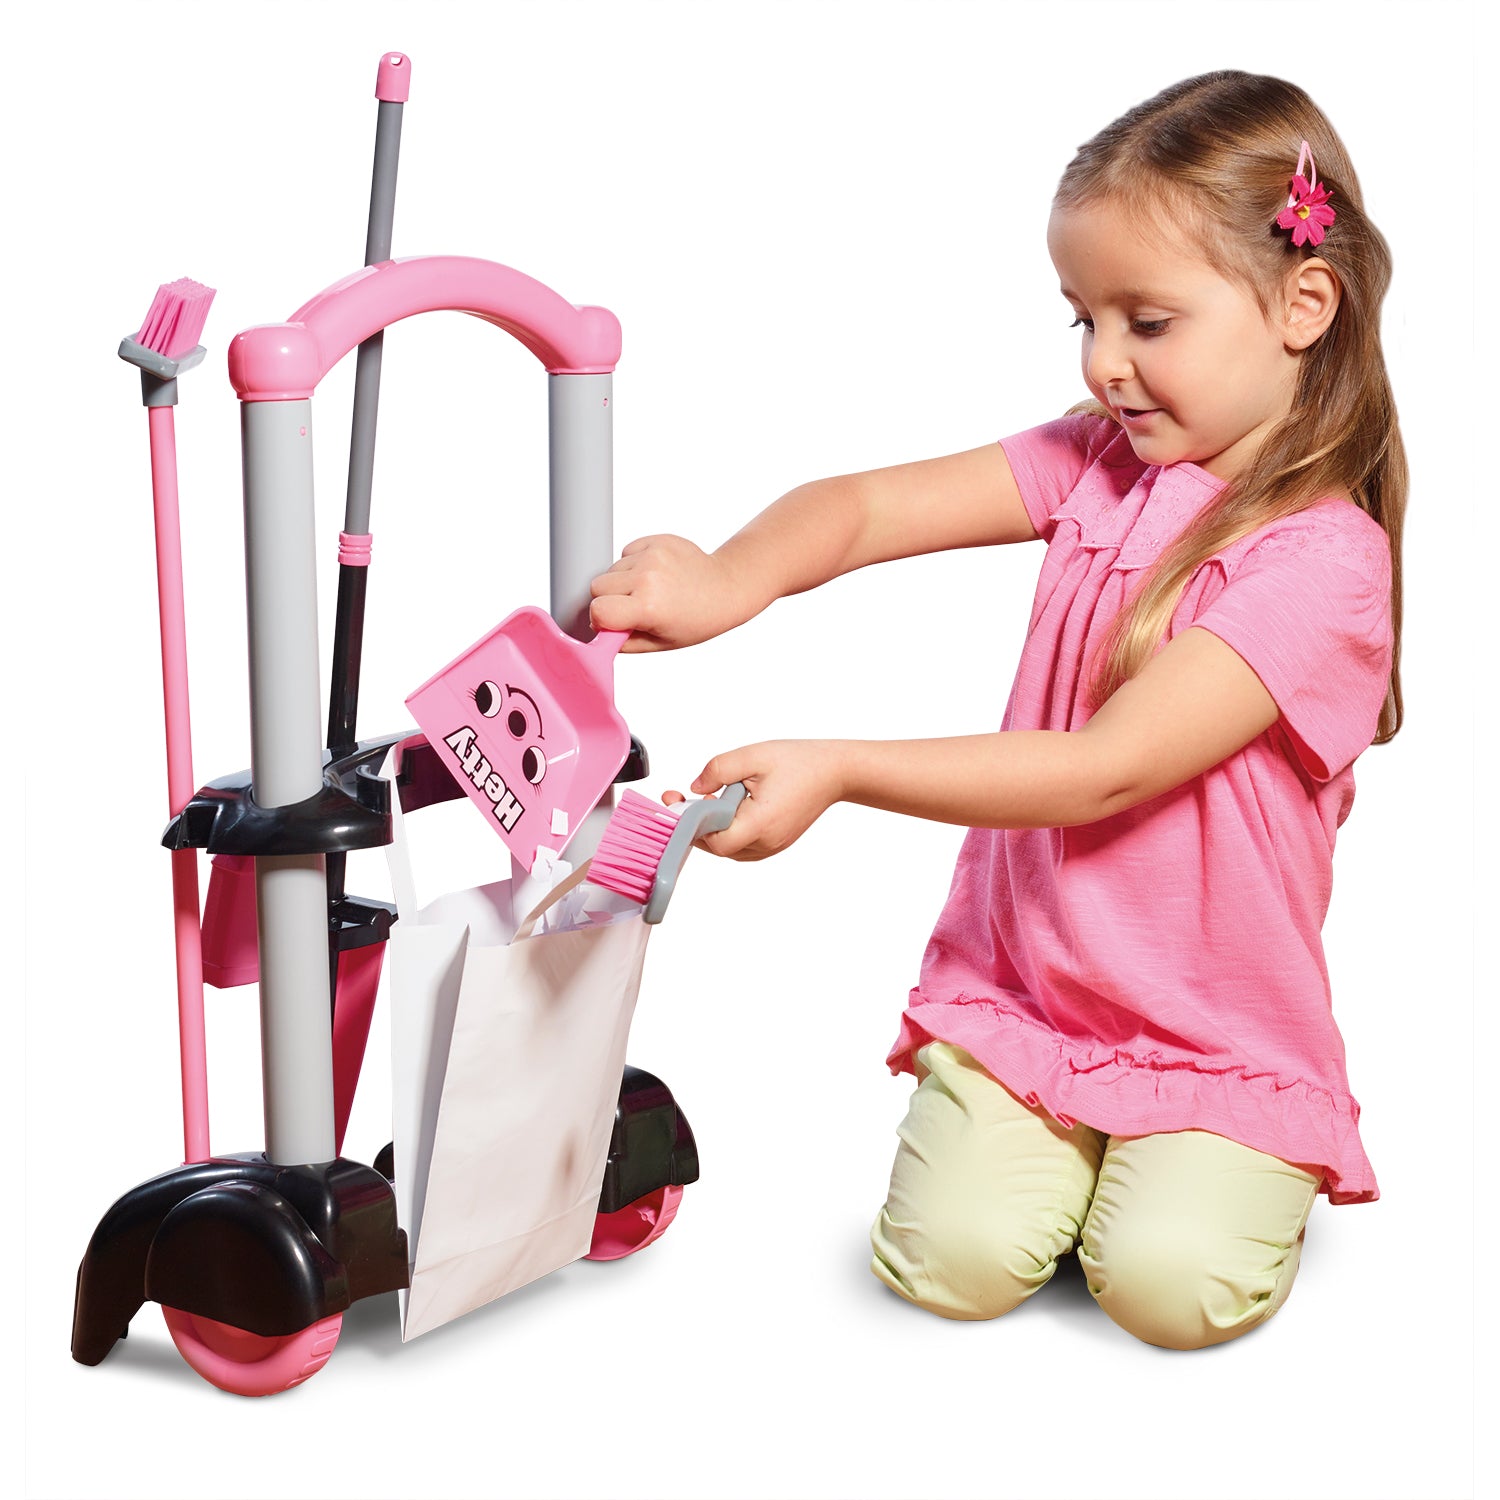 Casdon - Hetty Cleaning Trolley Toy